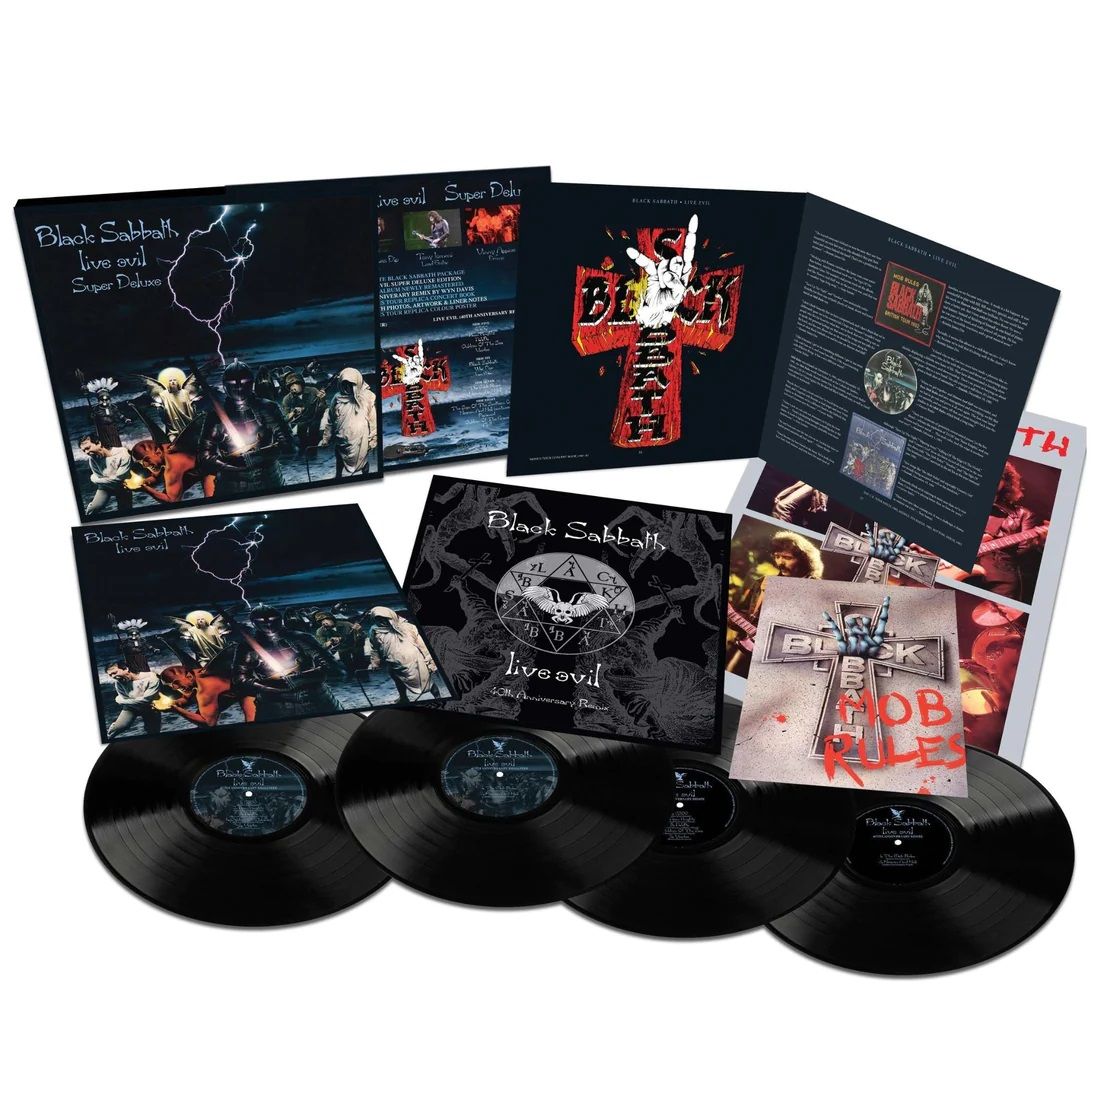 Black Sabbath - Live Evil (40th Anniversary Super Deluxe Ed. 4LP Box Set) - Vinyl - New